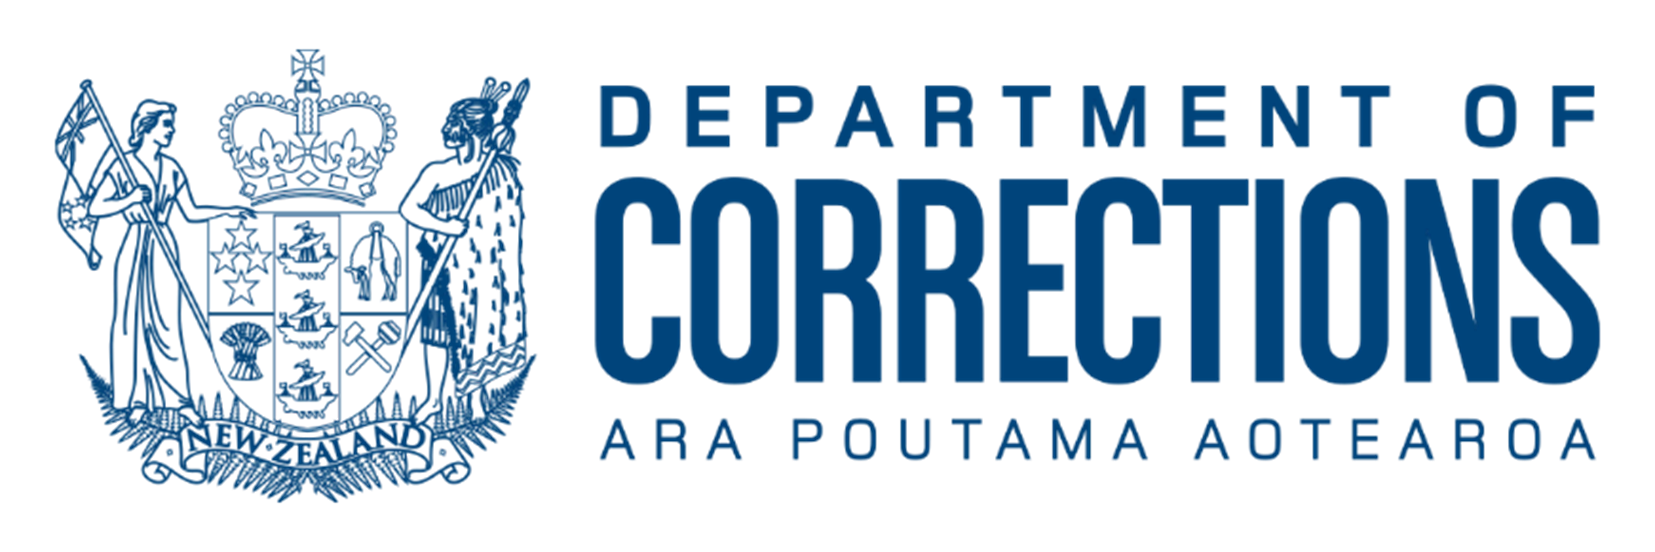 Department of corrections logo - Christchurch, NZ - Tint A Window